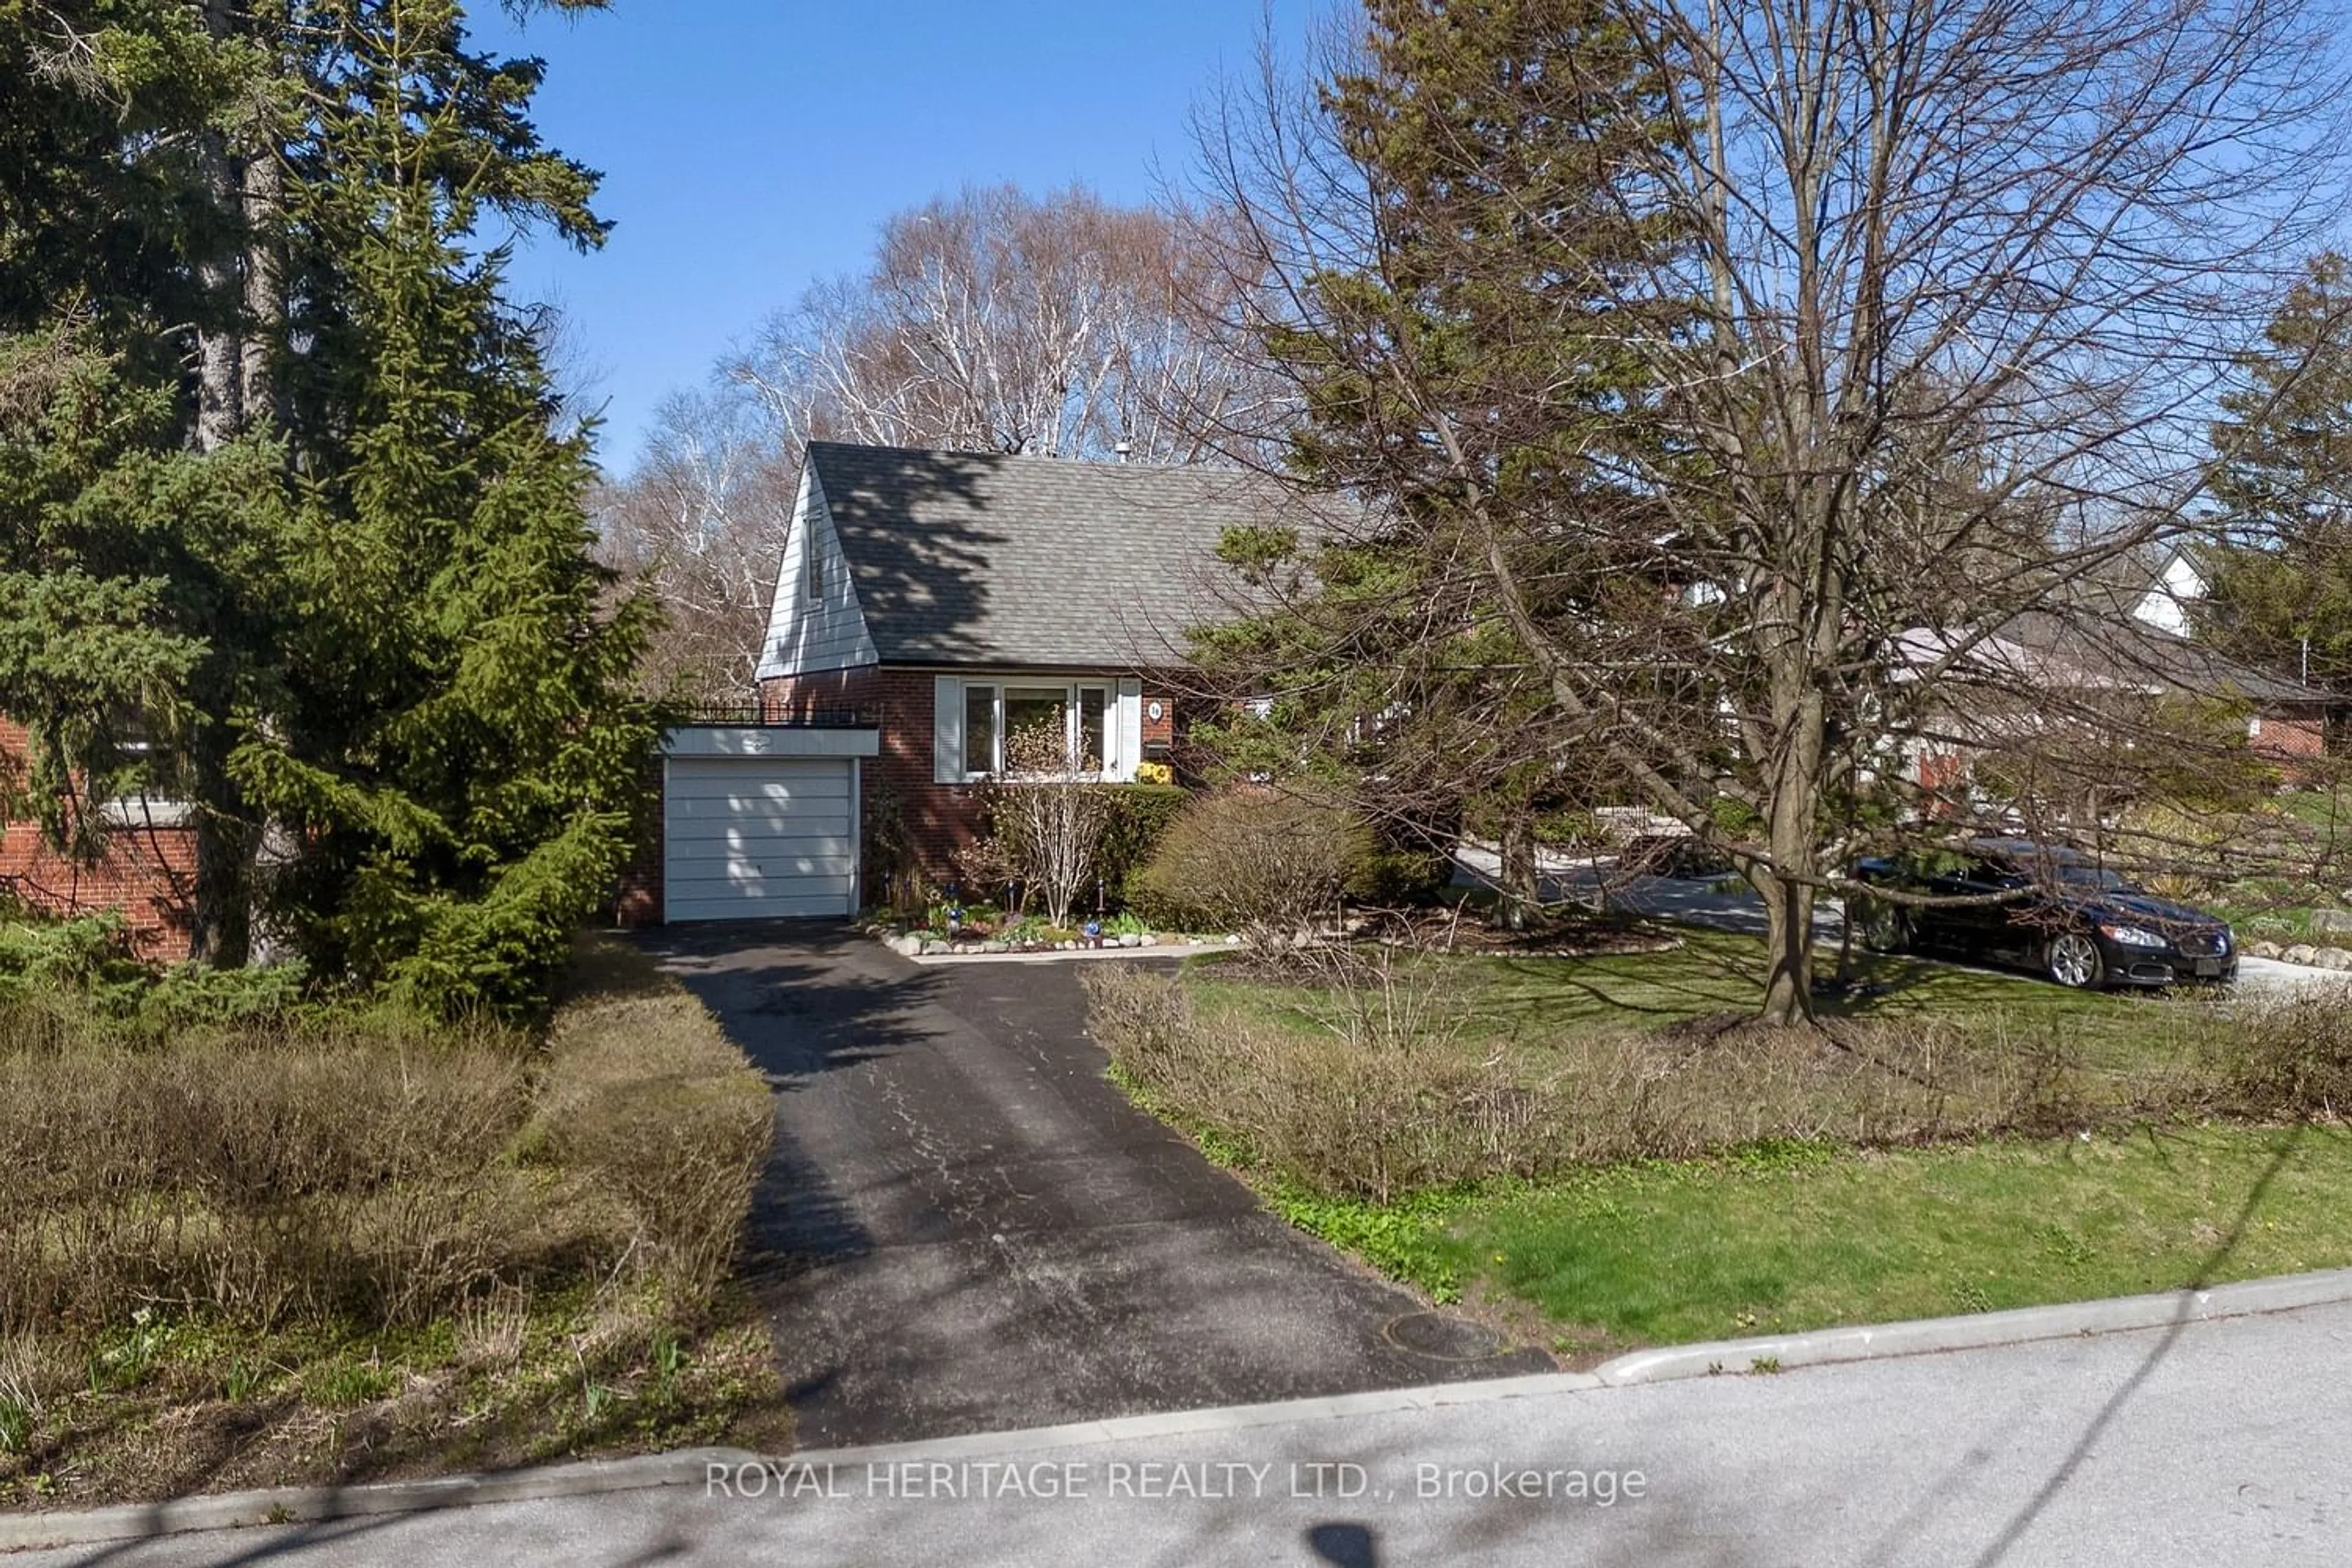 Frontside or backside of a home for 36 Cliffcrest Dr, Toronto Ontario M1M 2K3